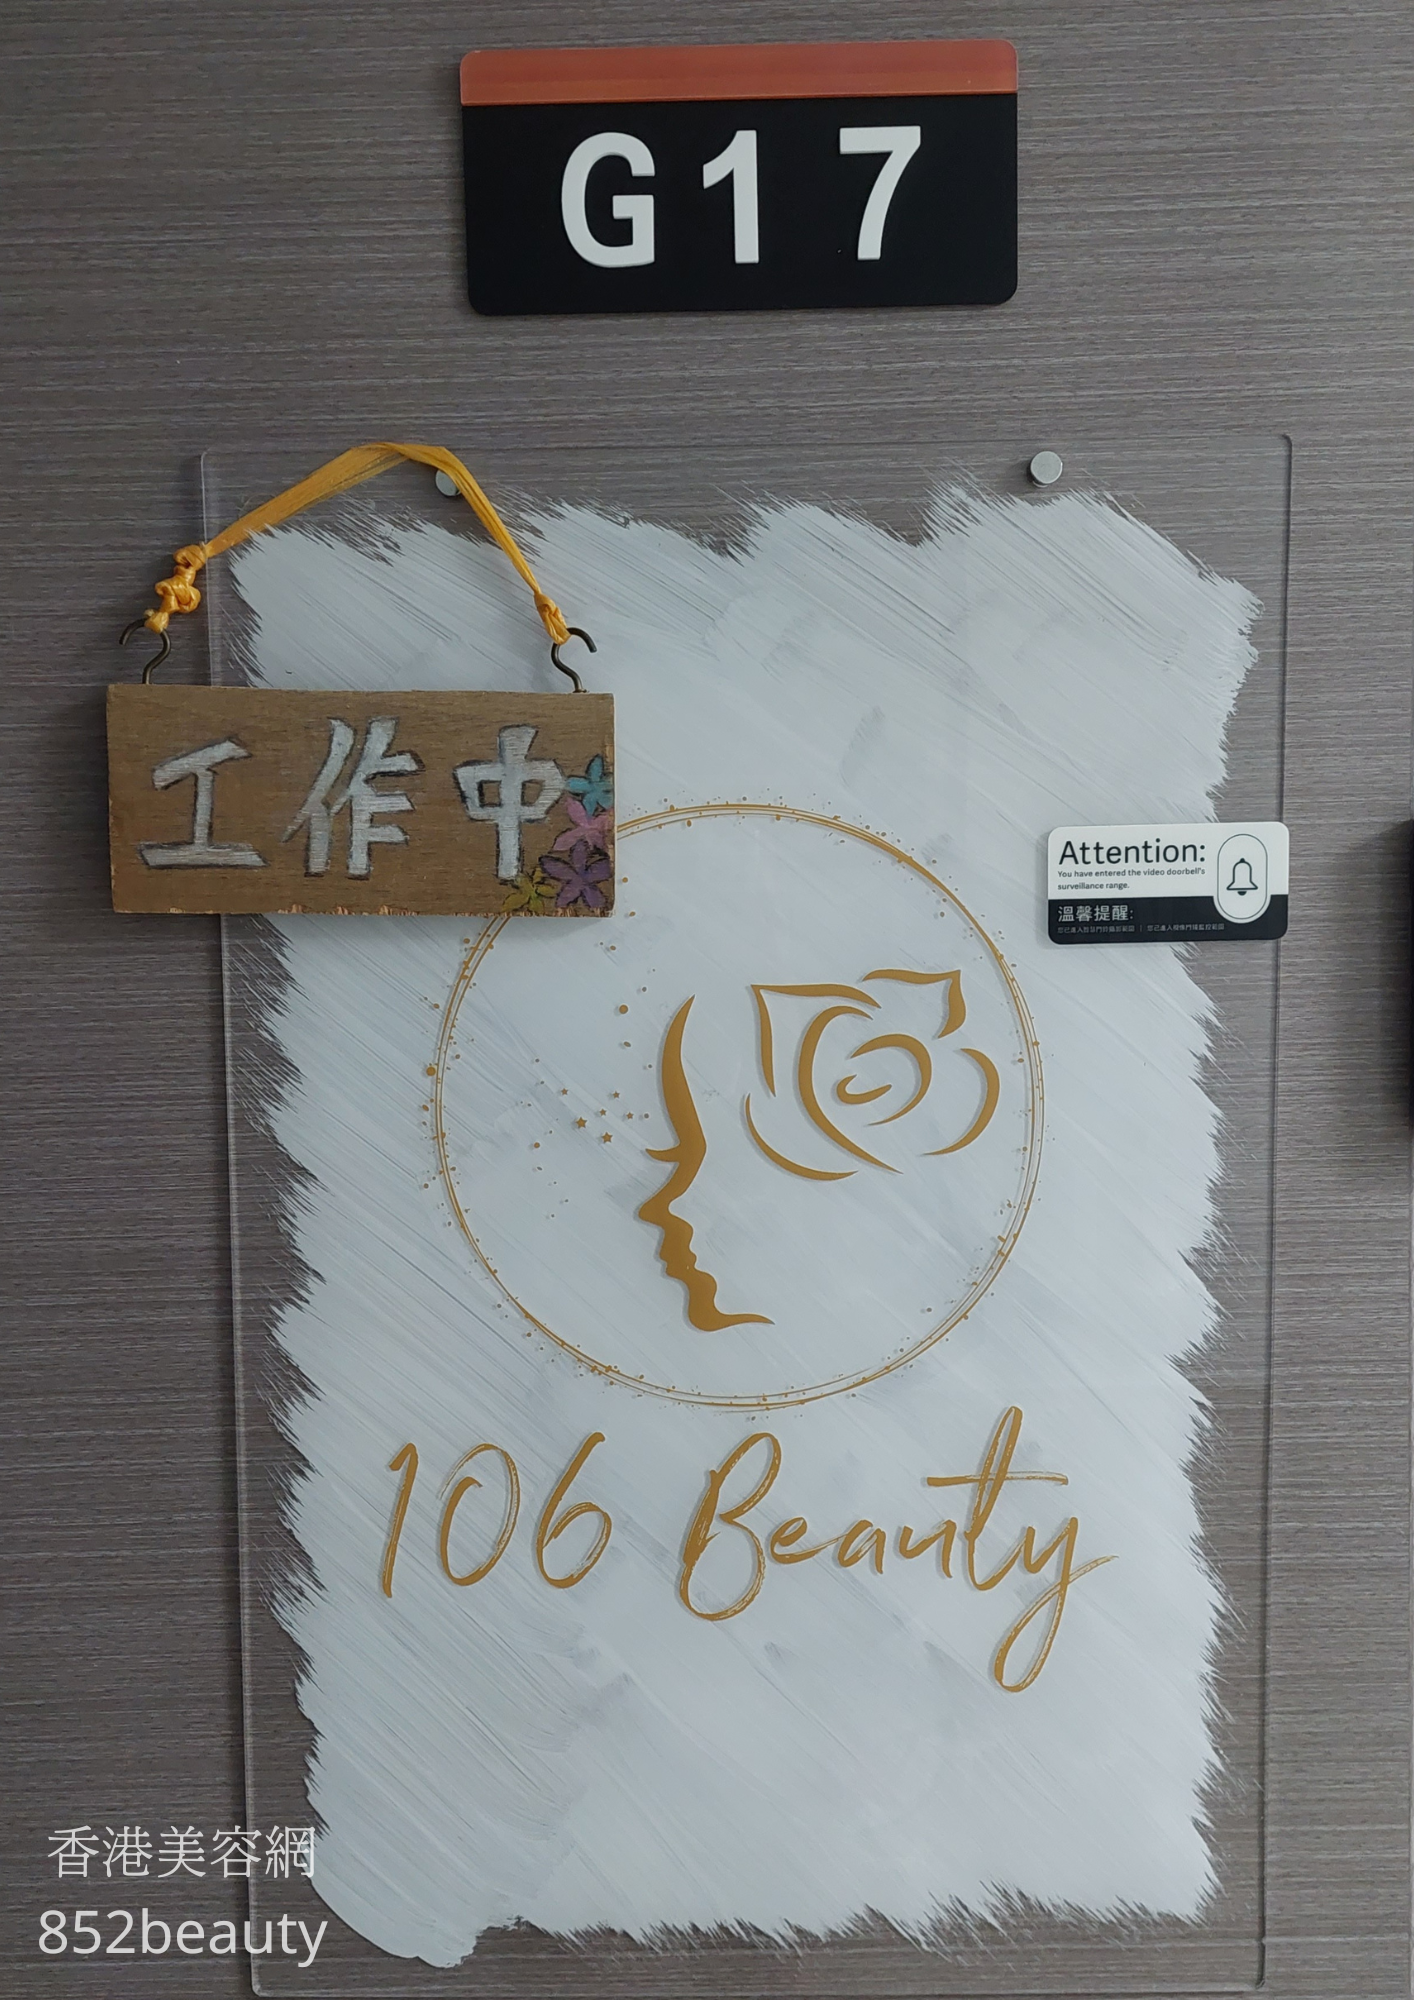 脫毛: 106 Beauty